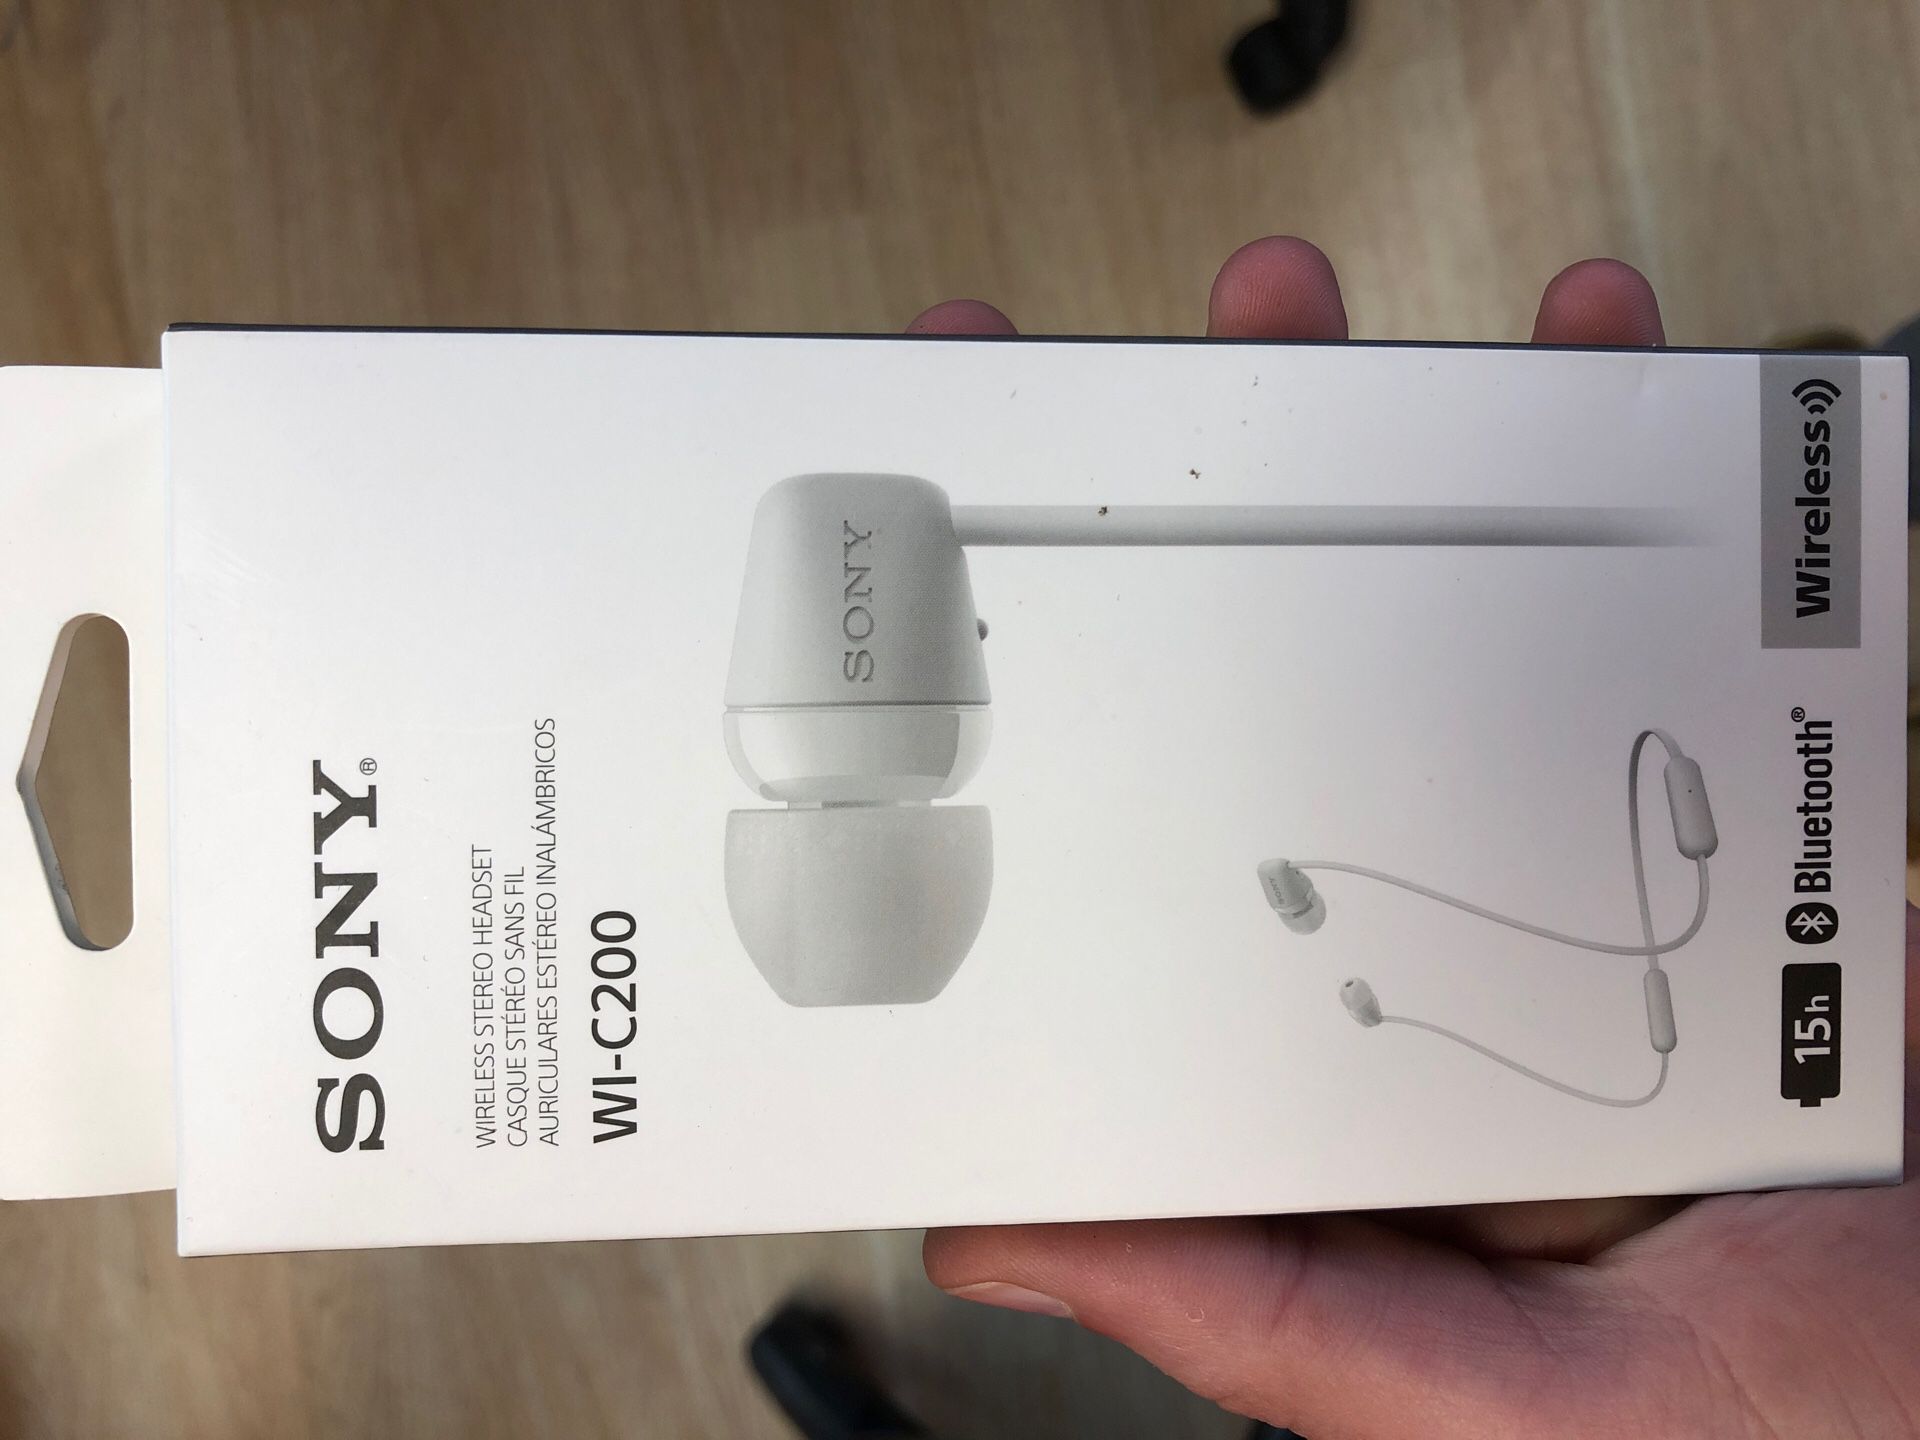 Sony Bluetooth Headphones-Wireless $15$